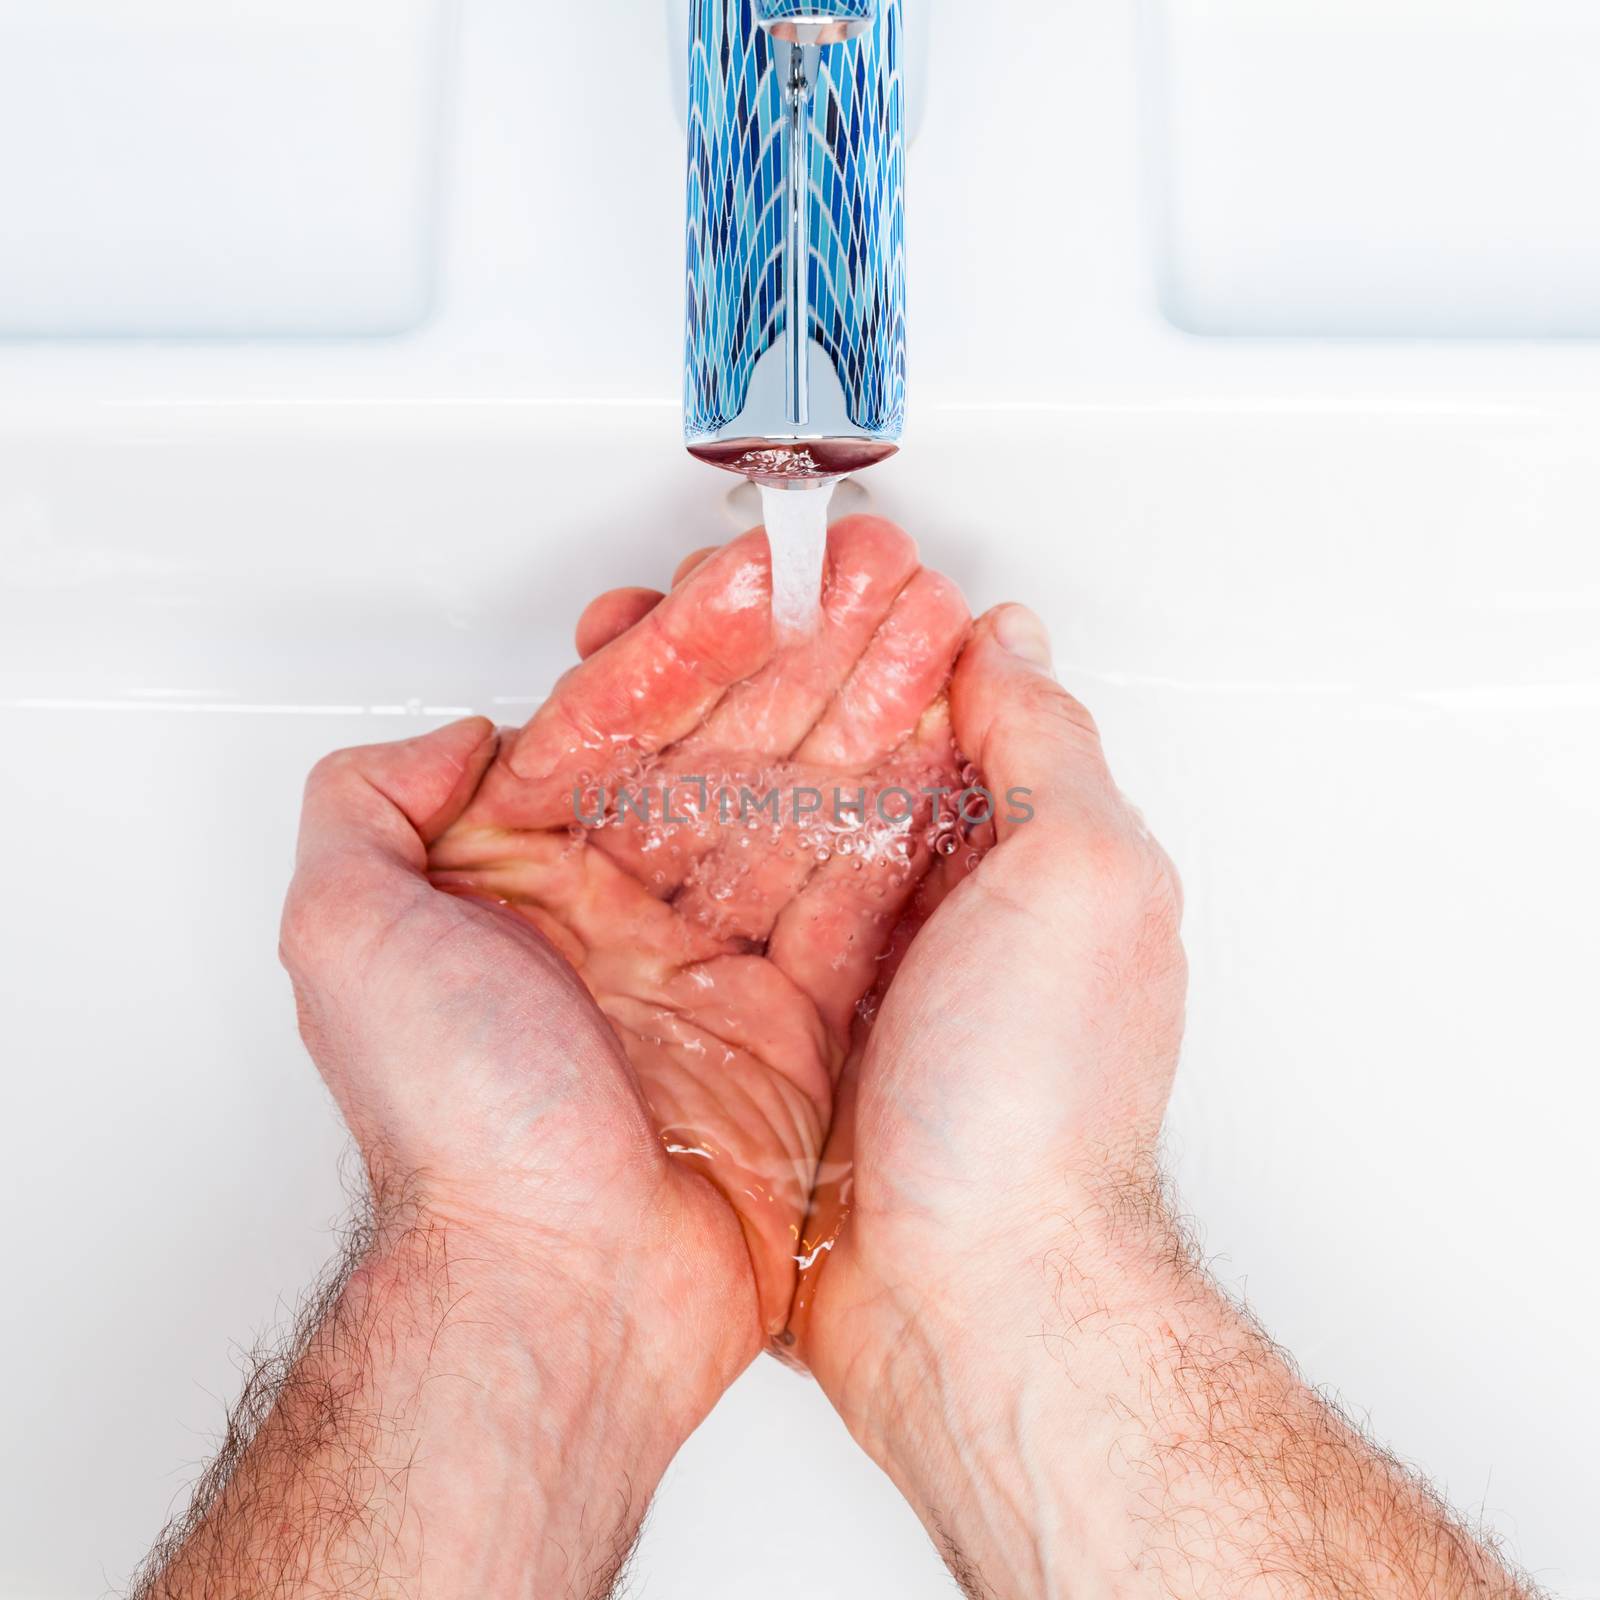 Man washing hands by naumoid